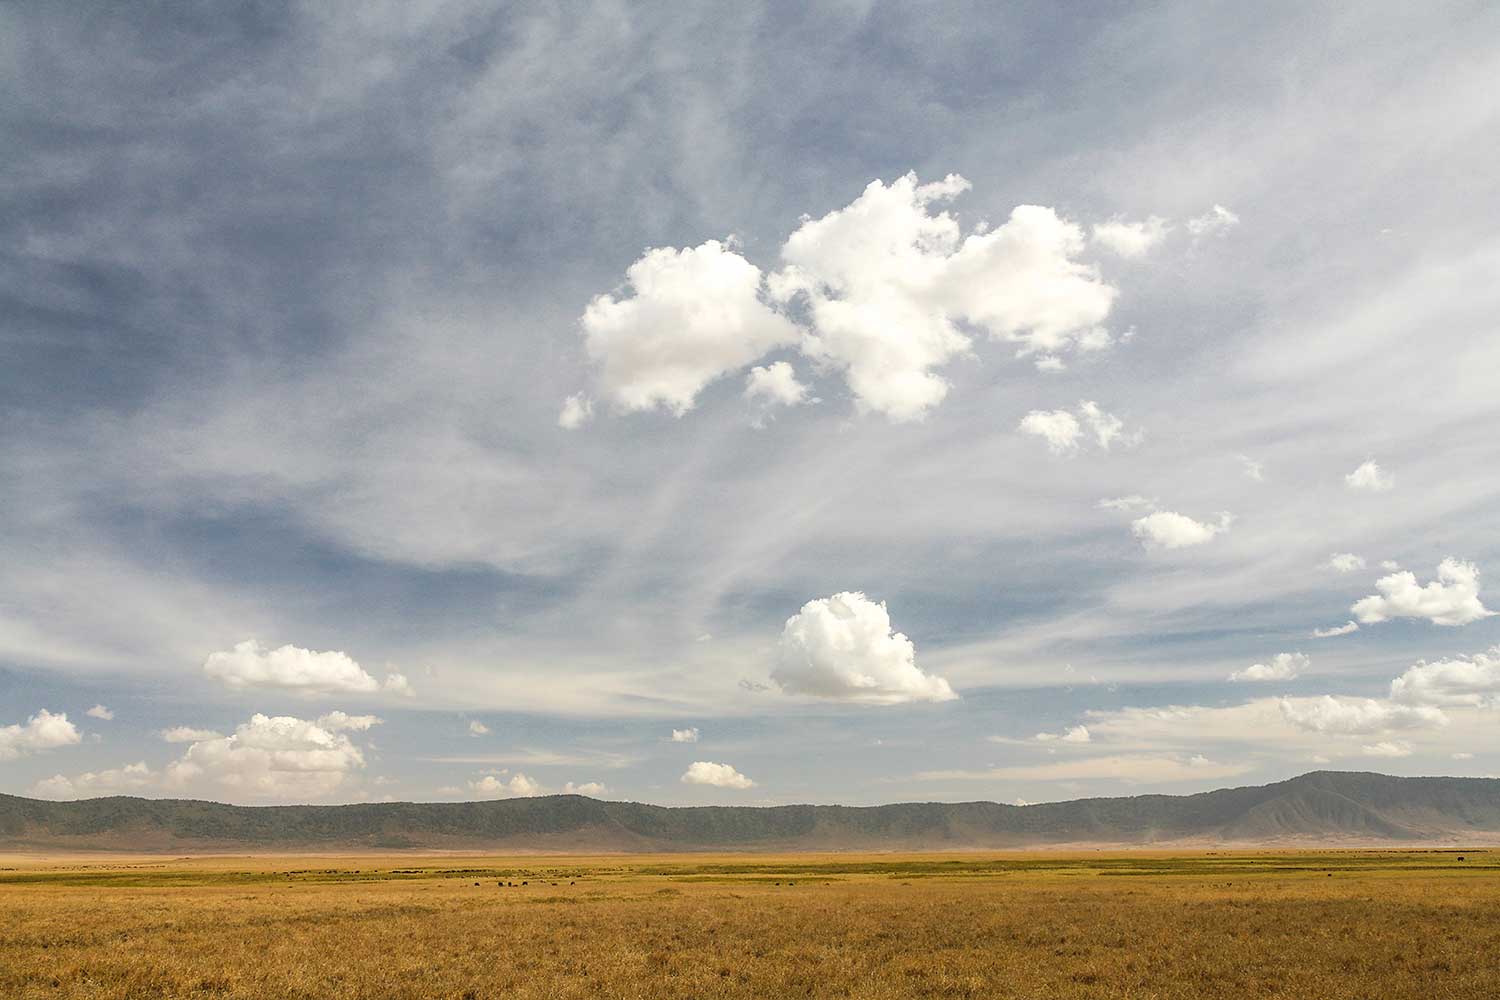 Ngorongoro. Tanzania